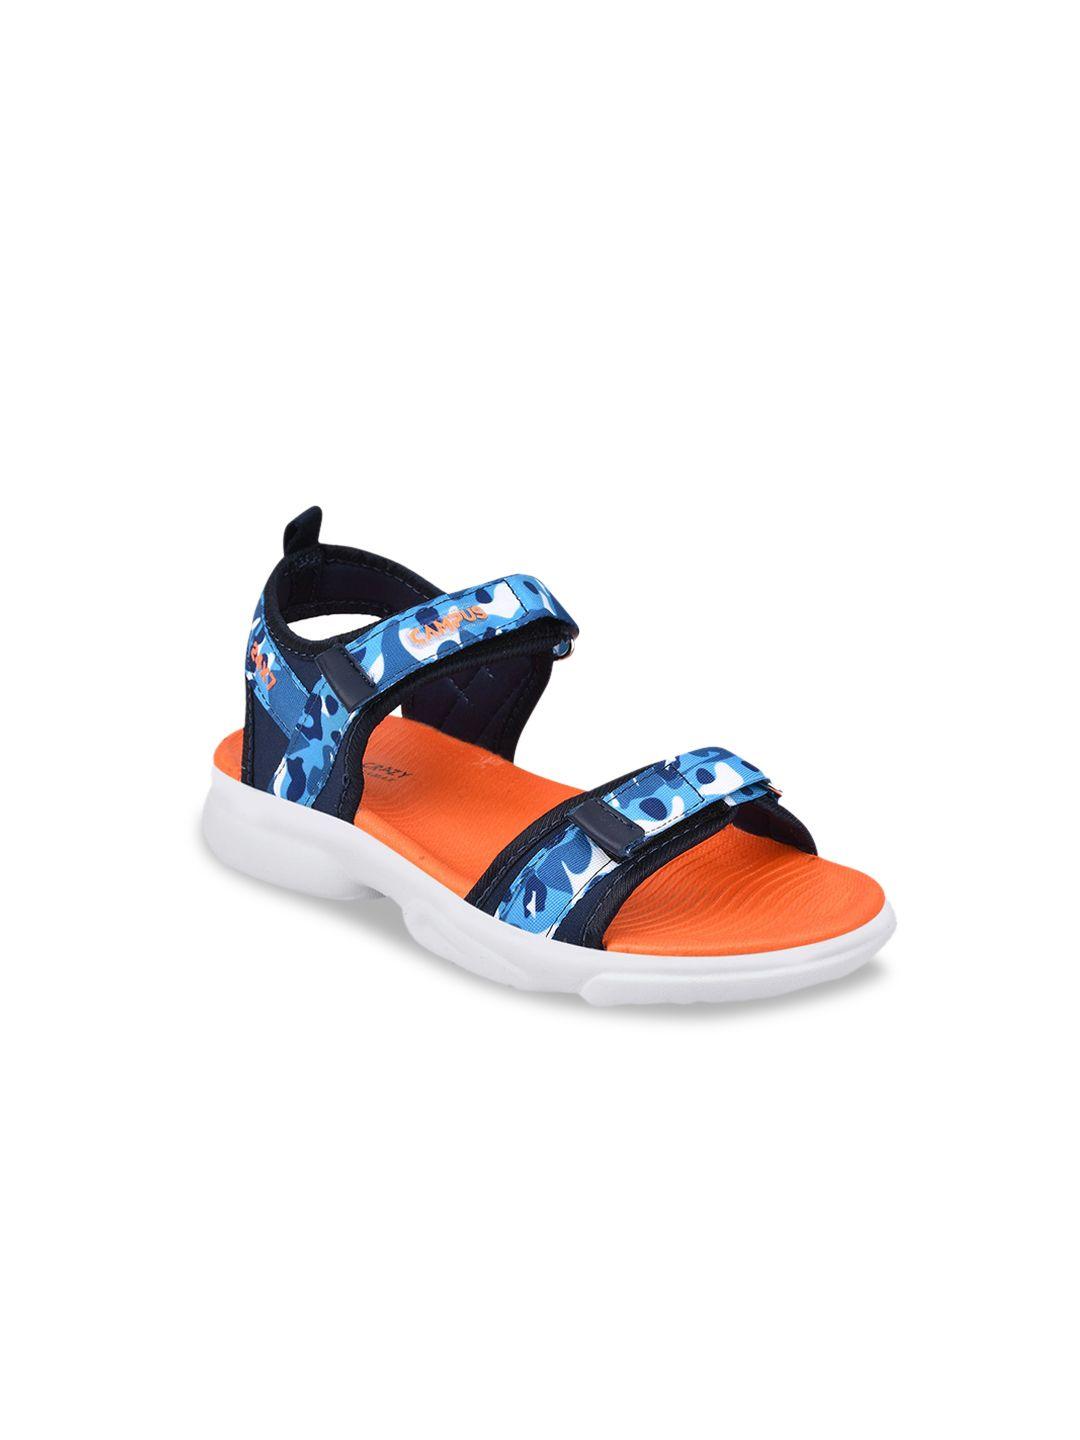 campus-kids-navy-blue-&-orange-printed-sports-sandals